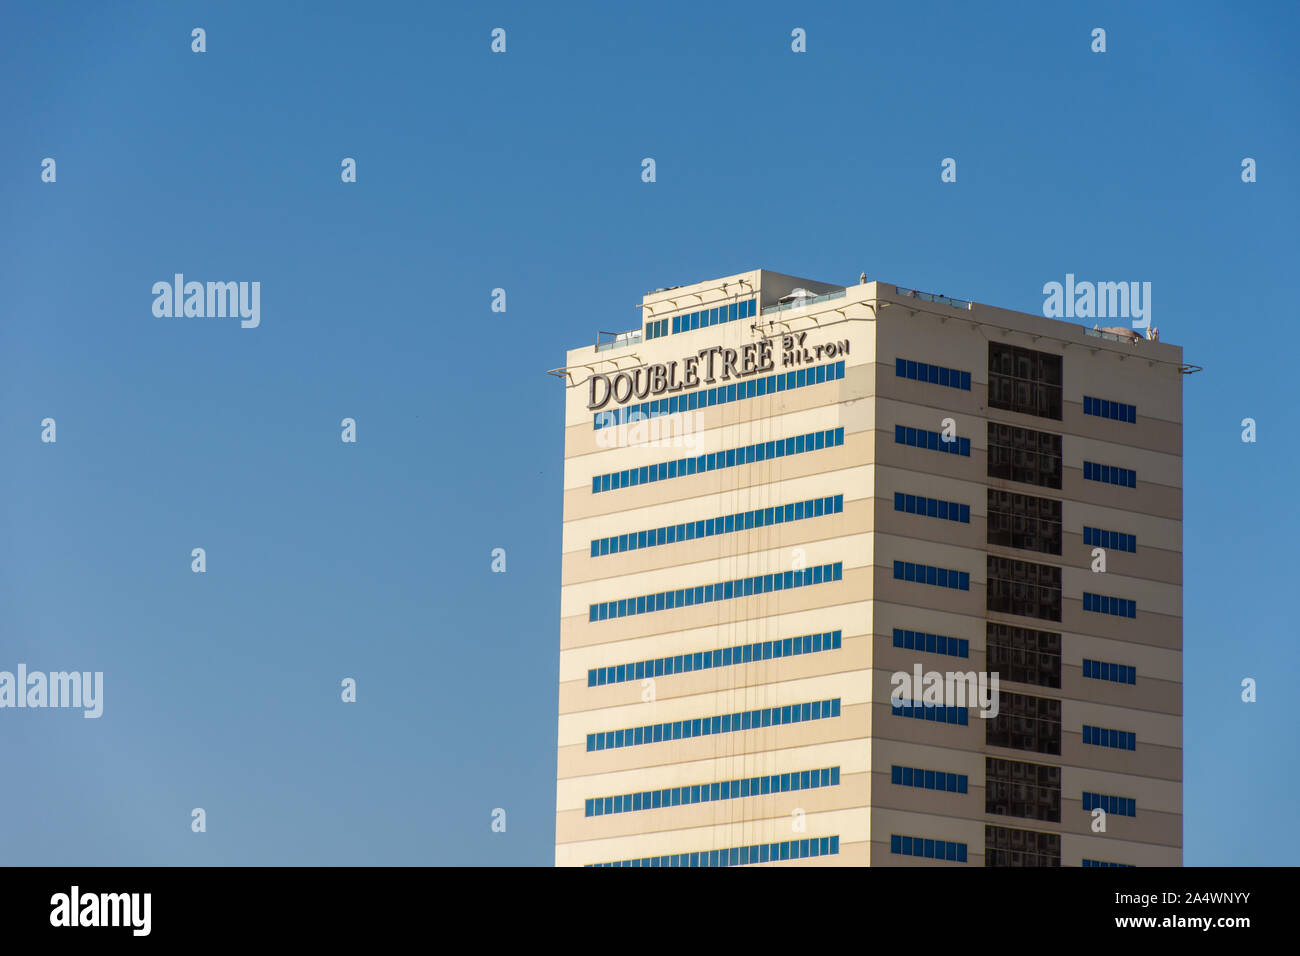 'Ras al Khaimah, Ras al Khaimah/United Arab Emirates - 10/16/2019: 'Hilton Double Tree Hotel building sign against blue sky background ' Stock Photo